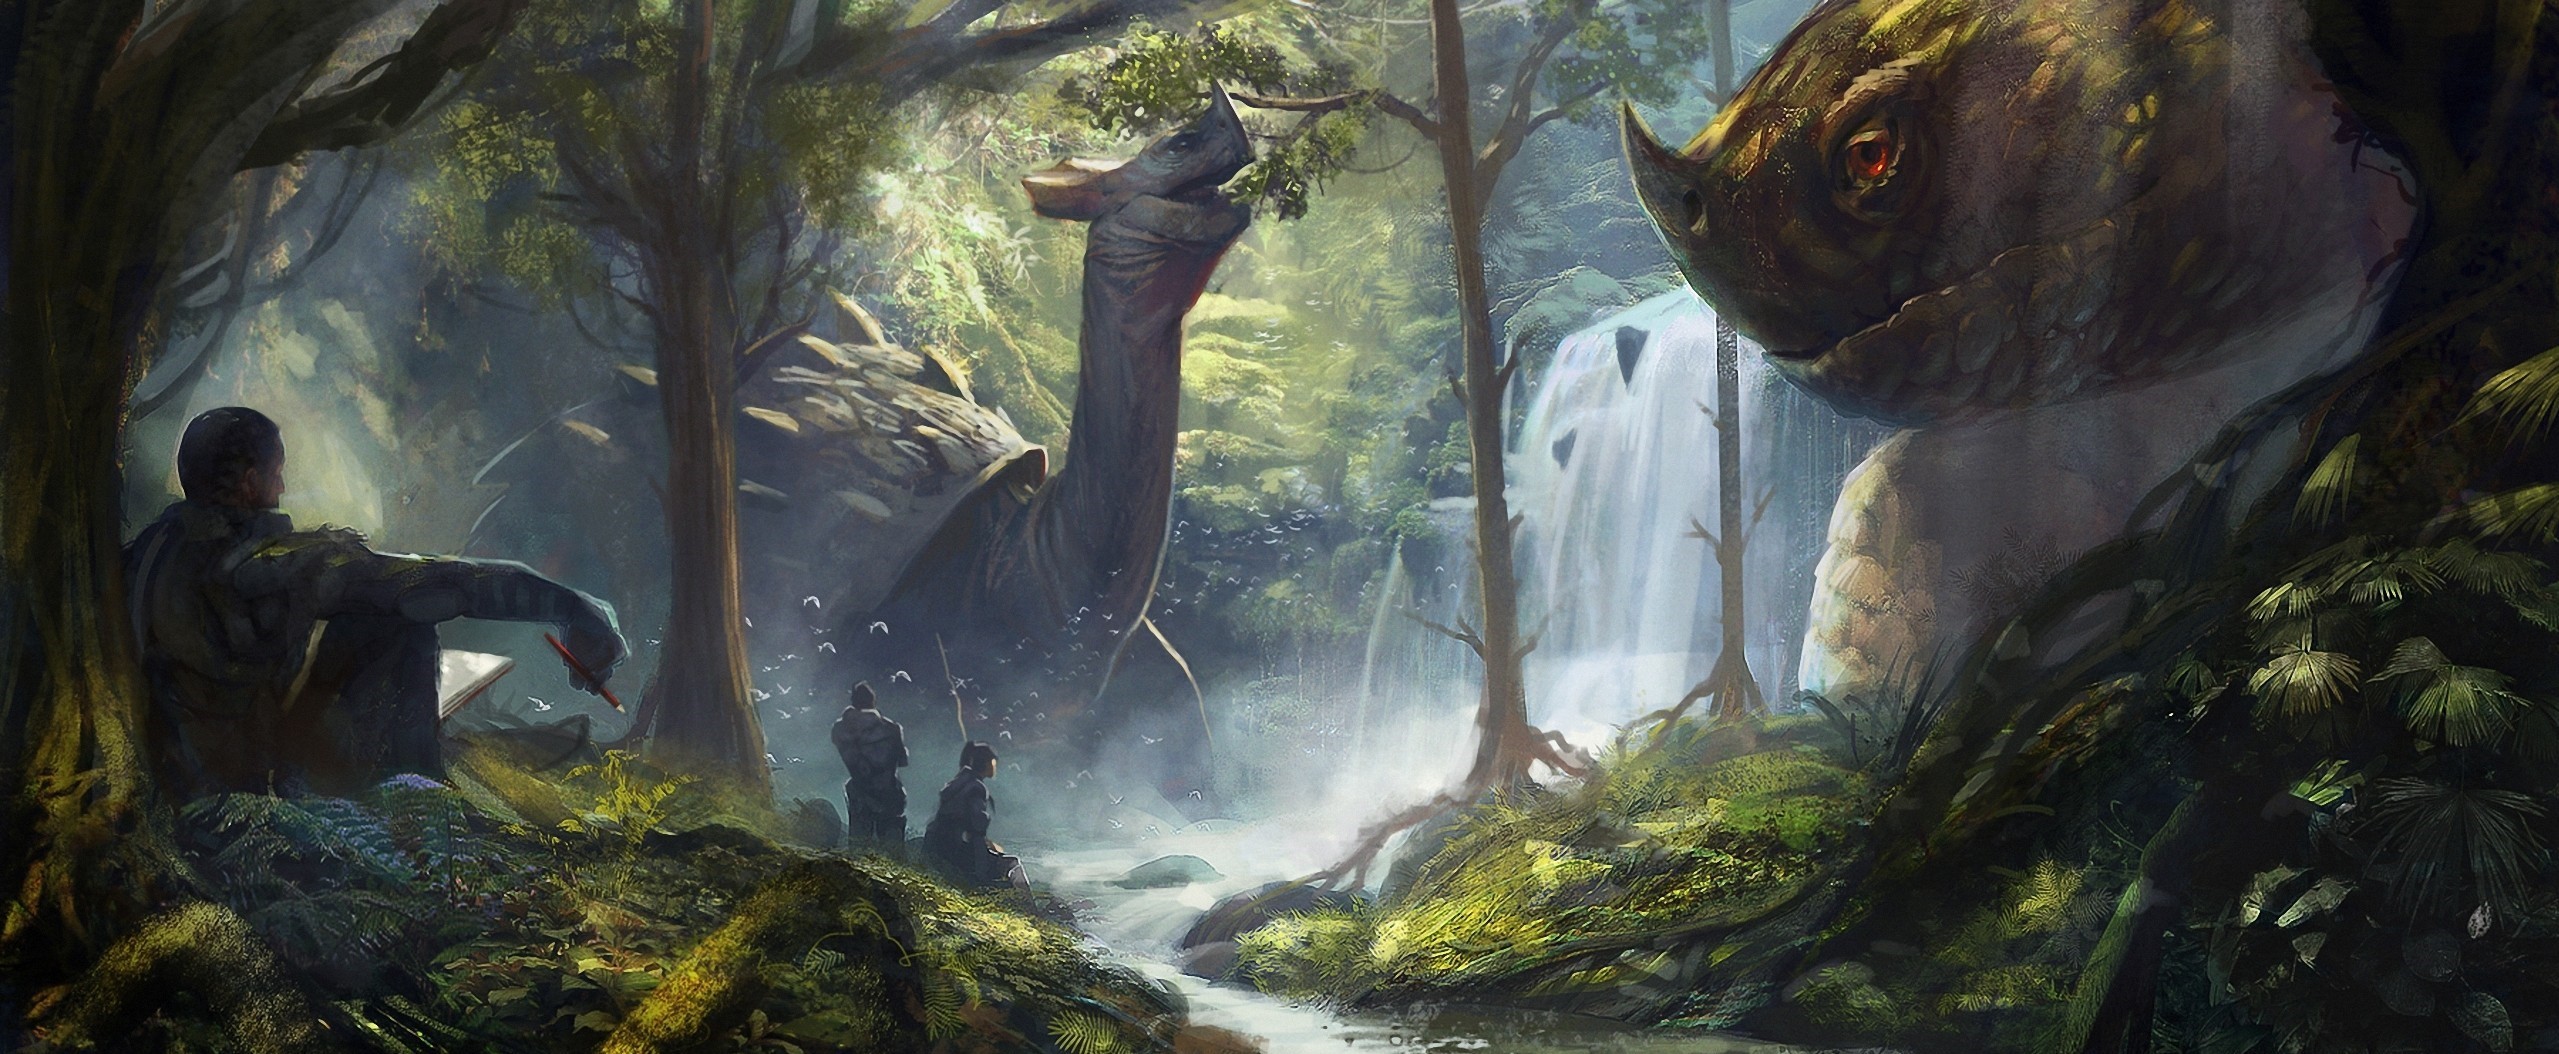 General 2559x1054 fantasy art artwork dinosaurs animals forest